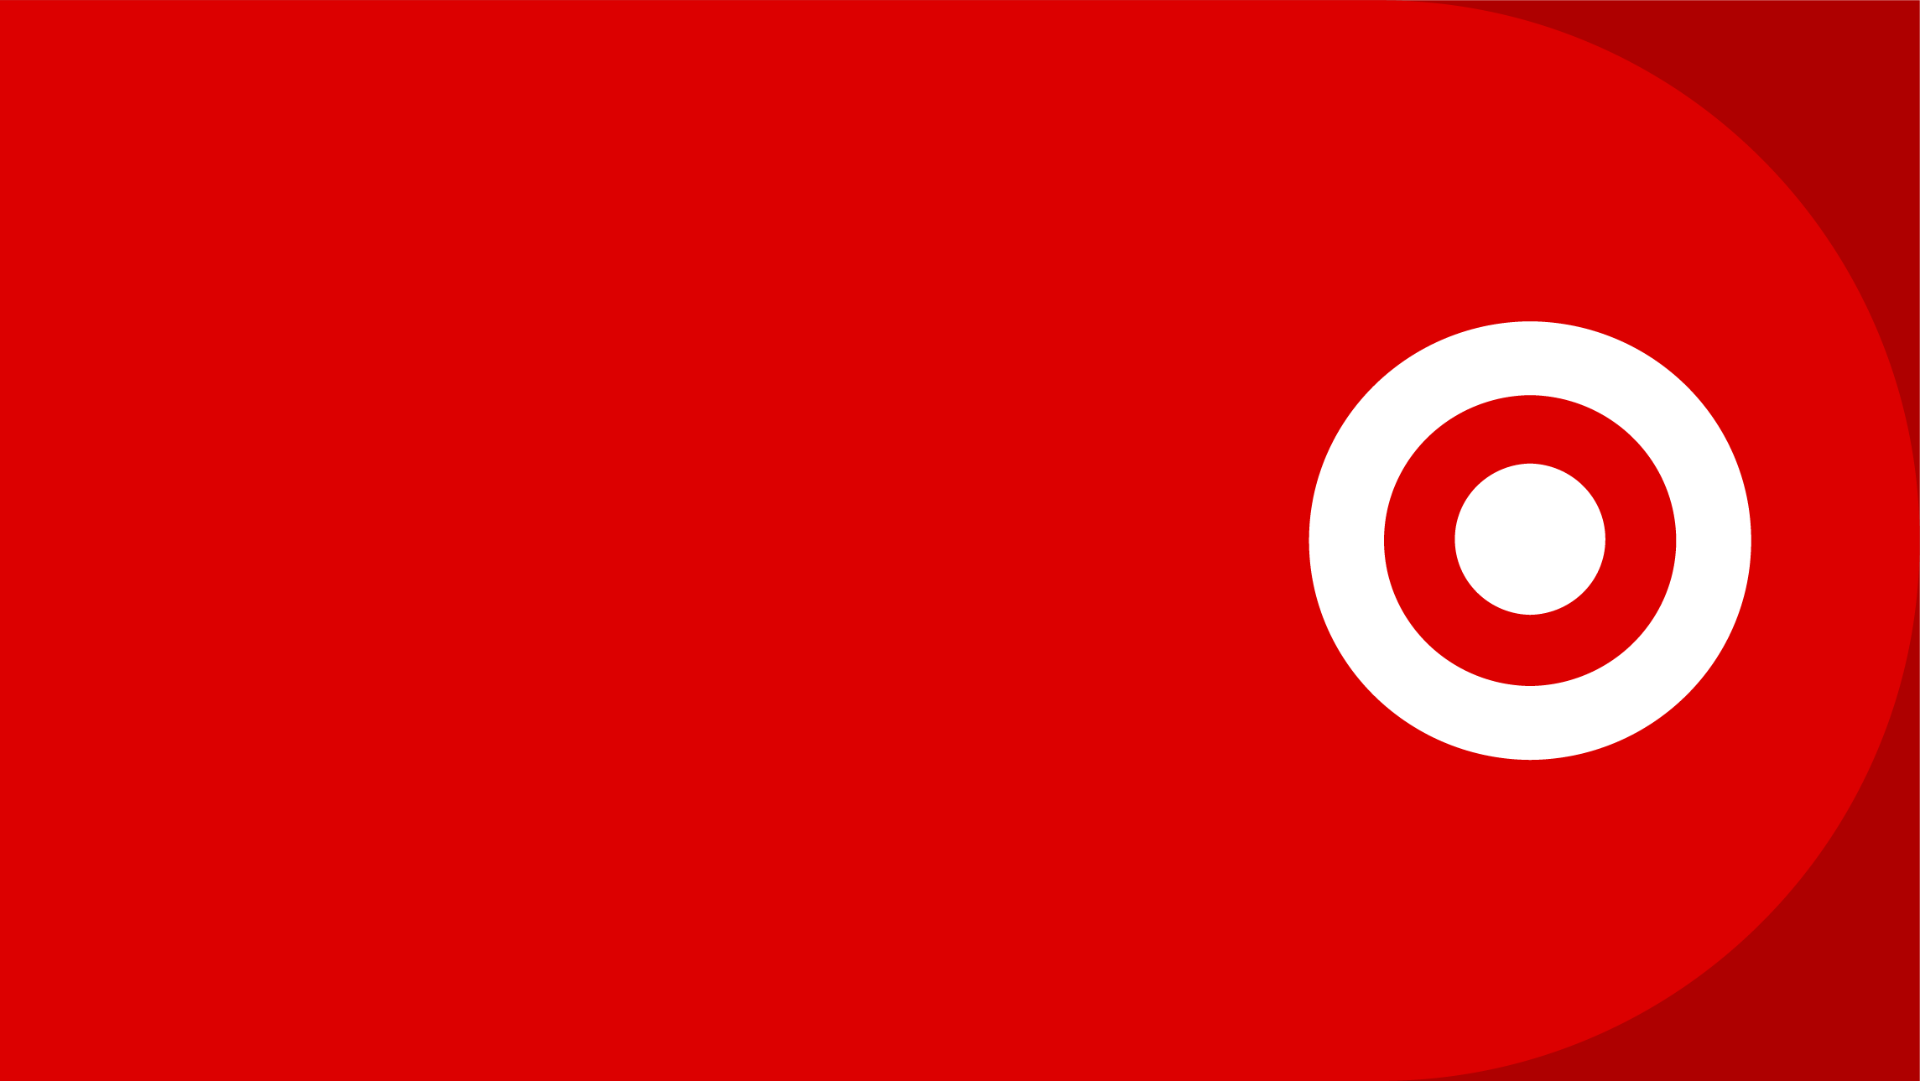 The white Bullseye logo on a red background.